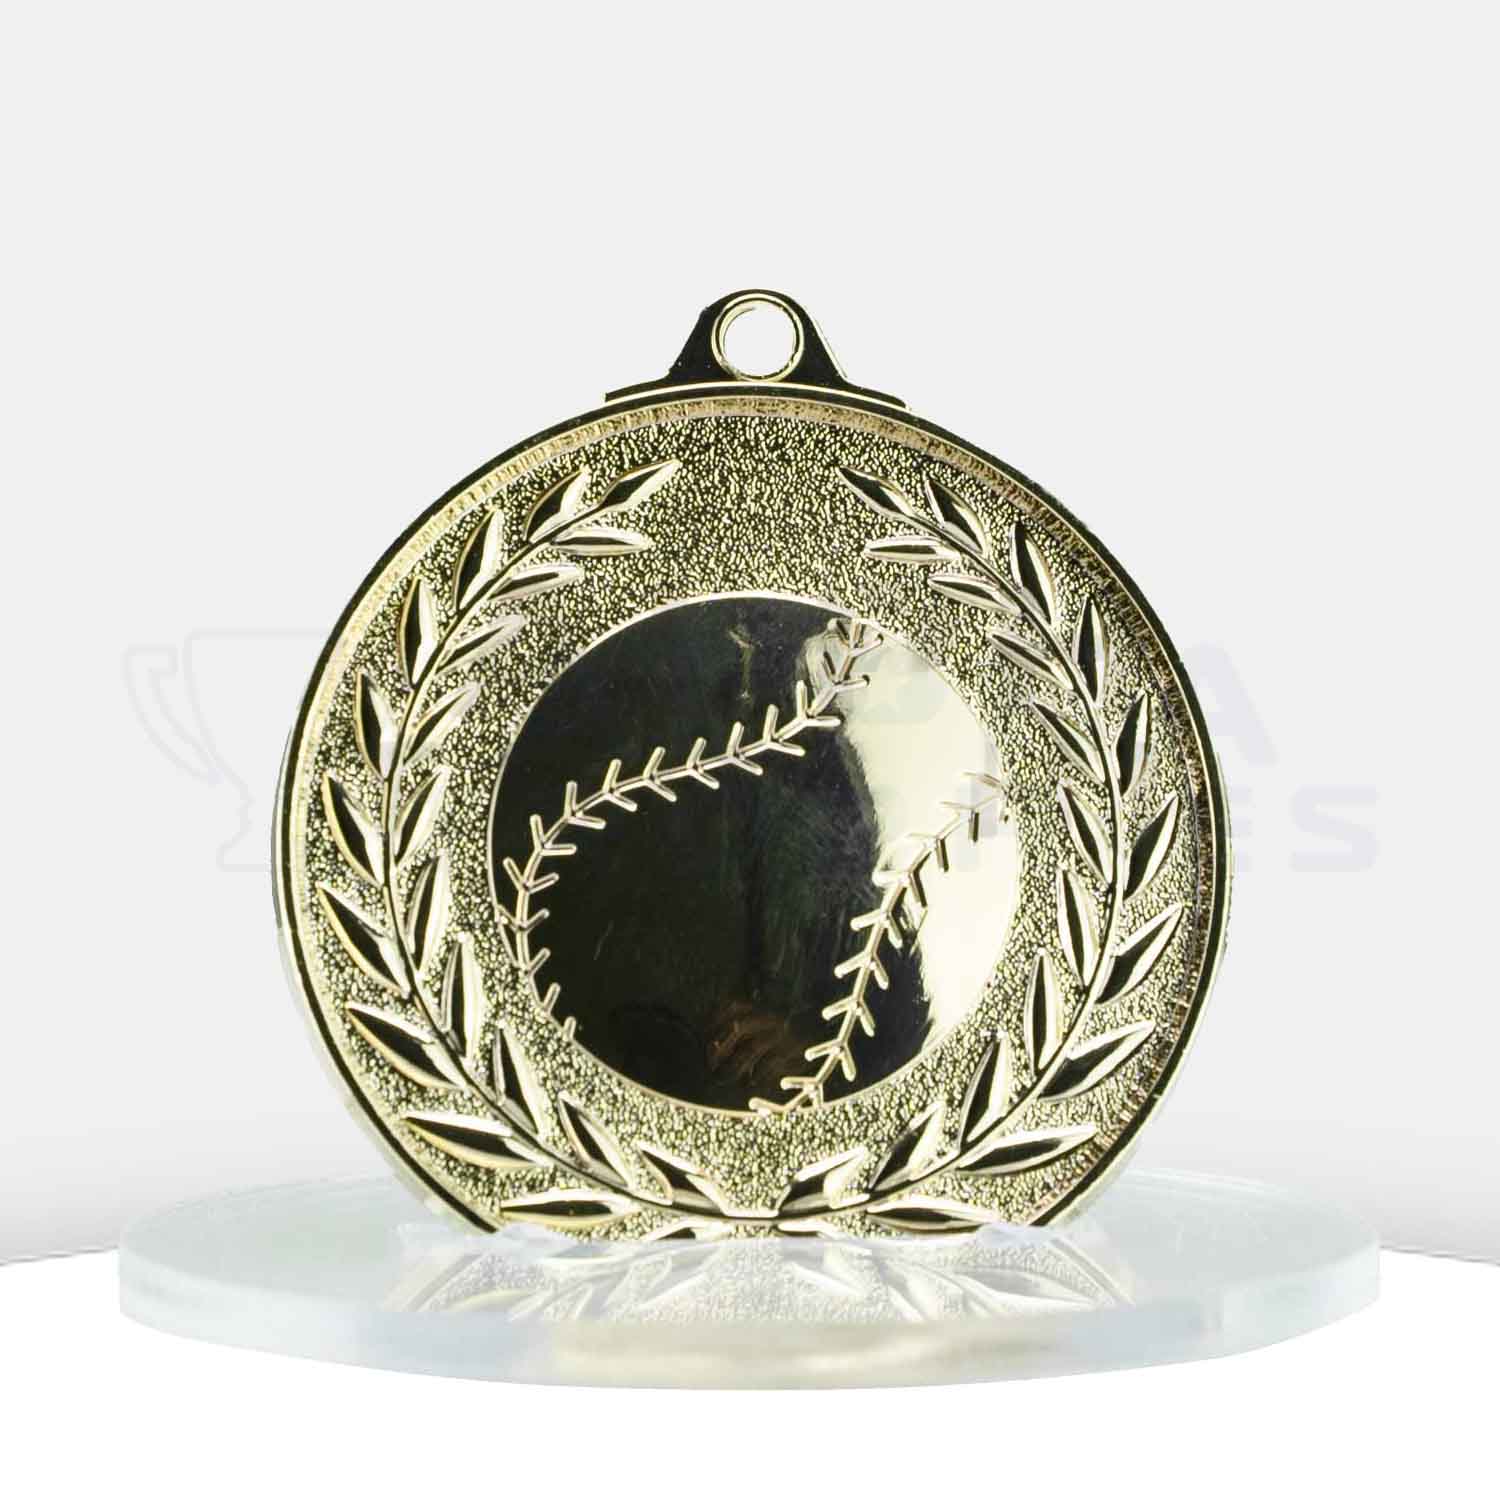 Baseball / Softball Classic Wreath Medal